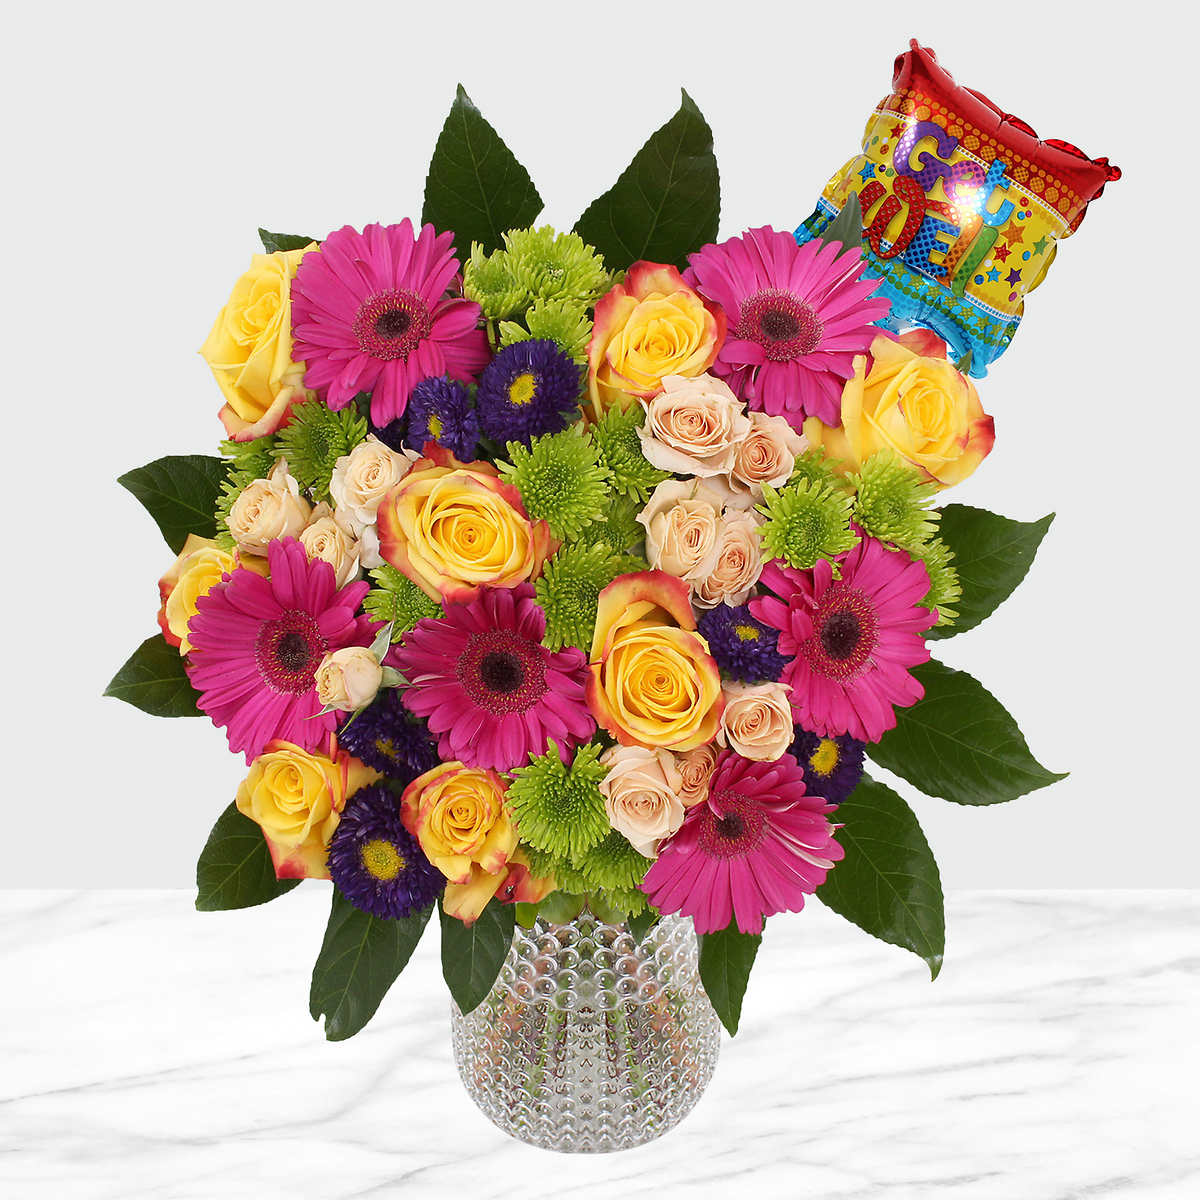 Full flower arrangement Earn cash back read the “description”